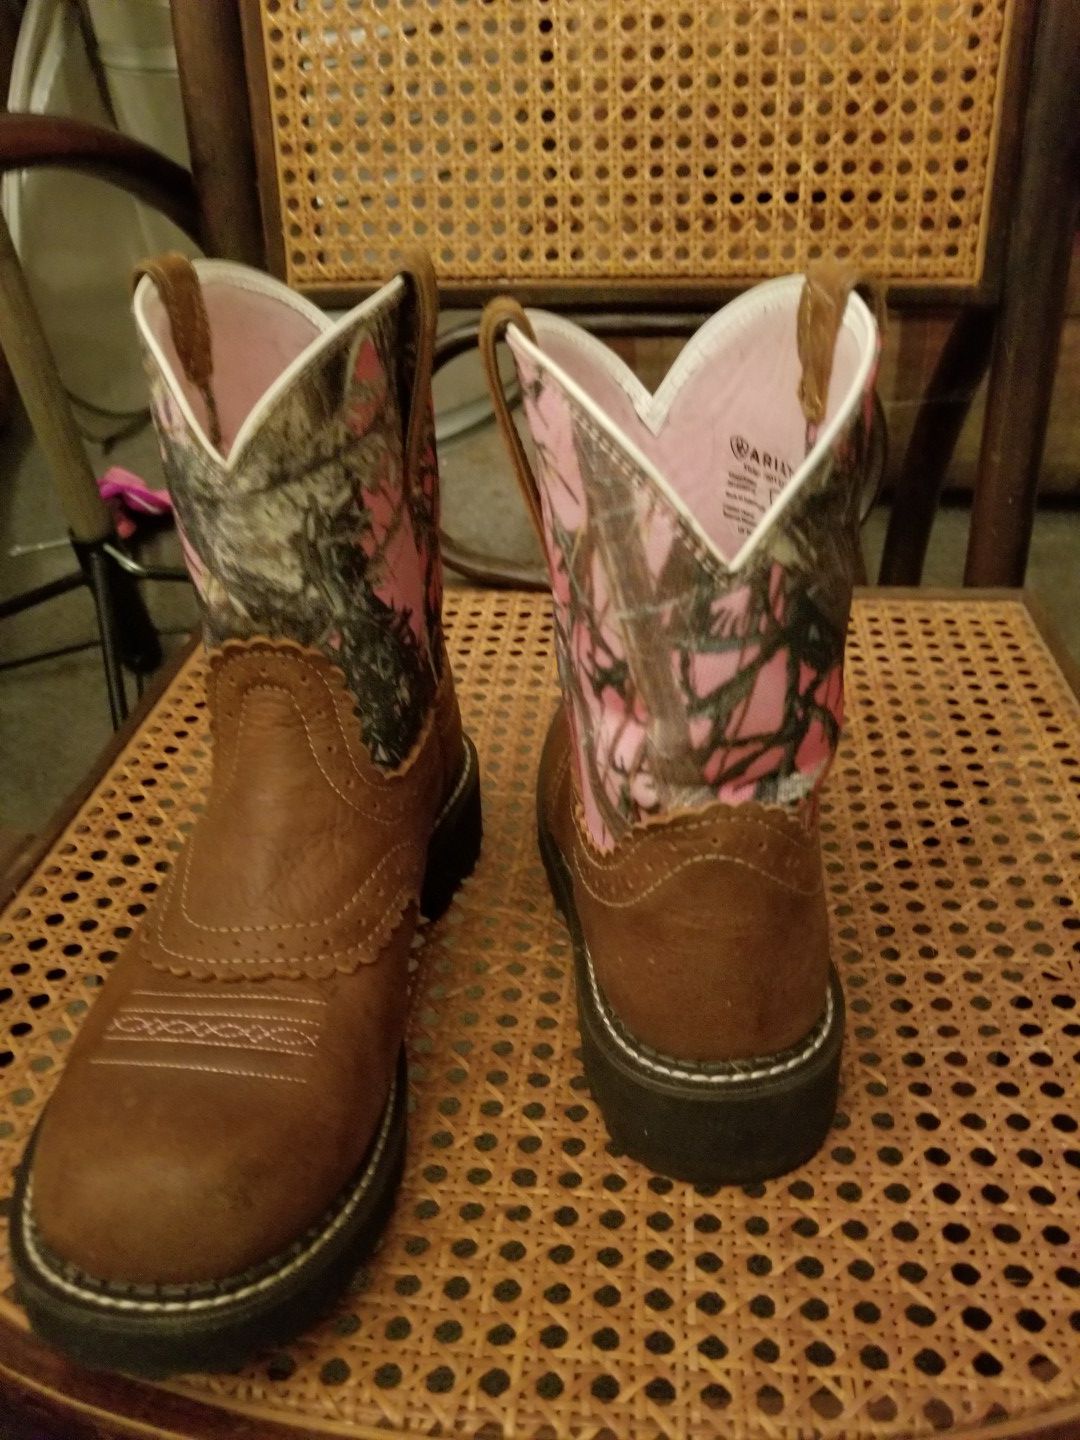 Ariat boots